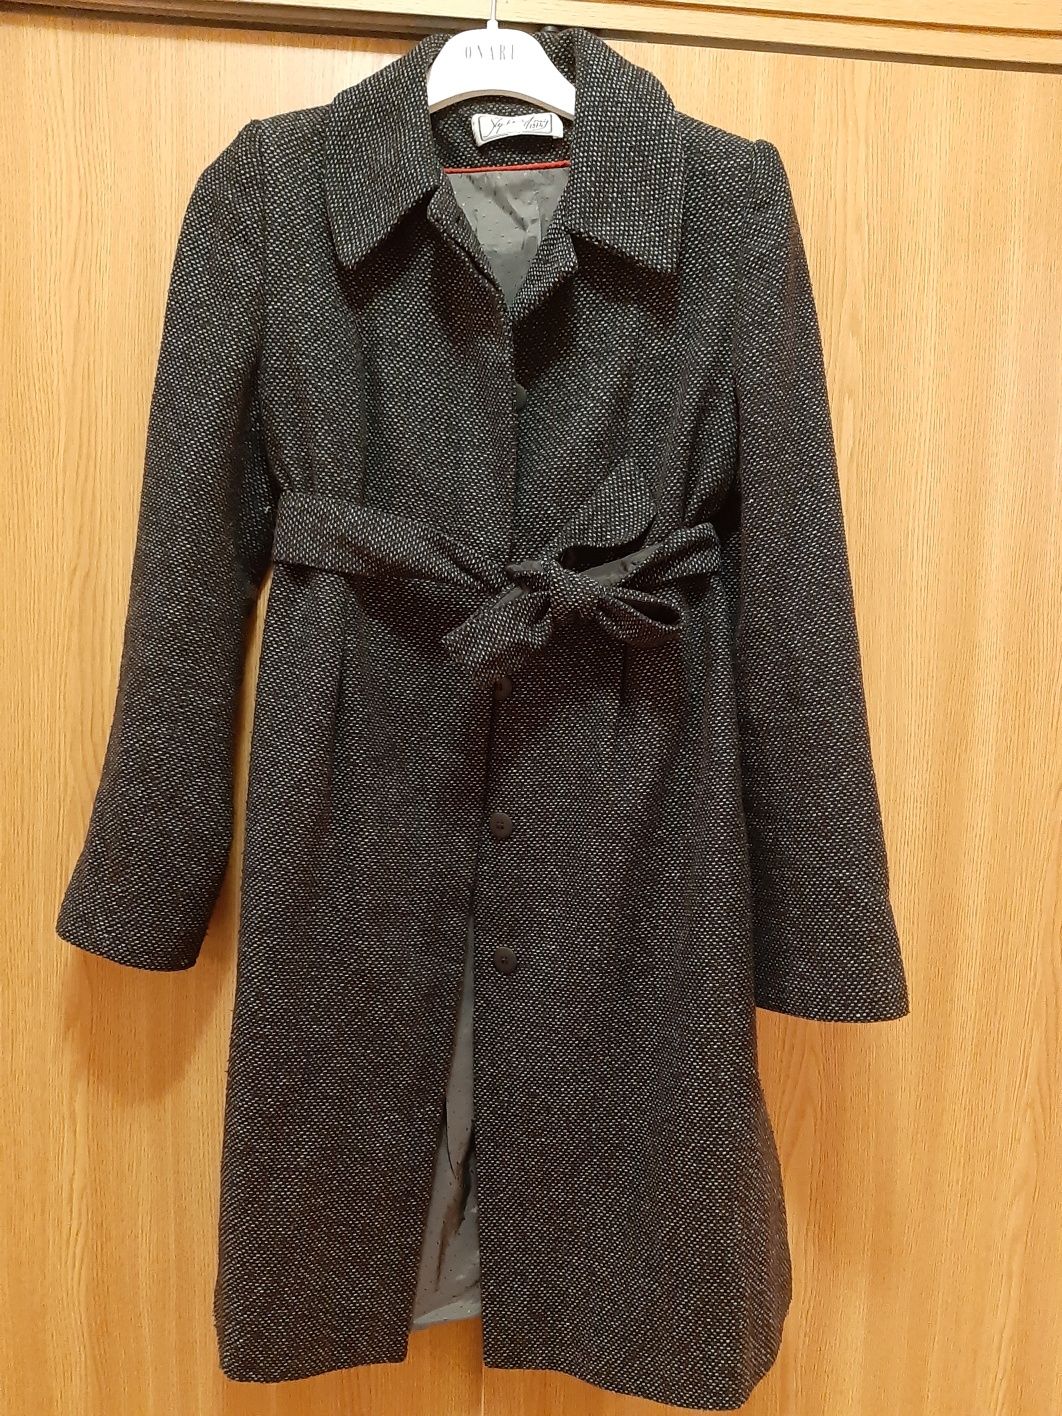 Palton negru, in carouri, masura 36-38